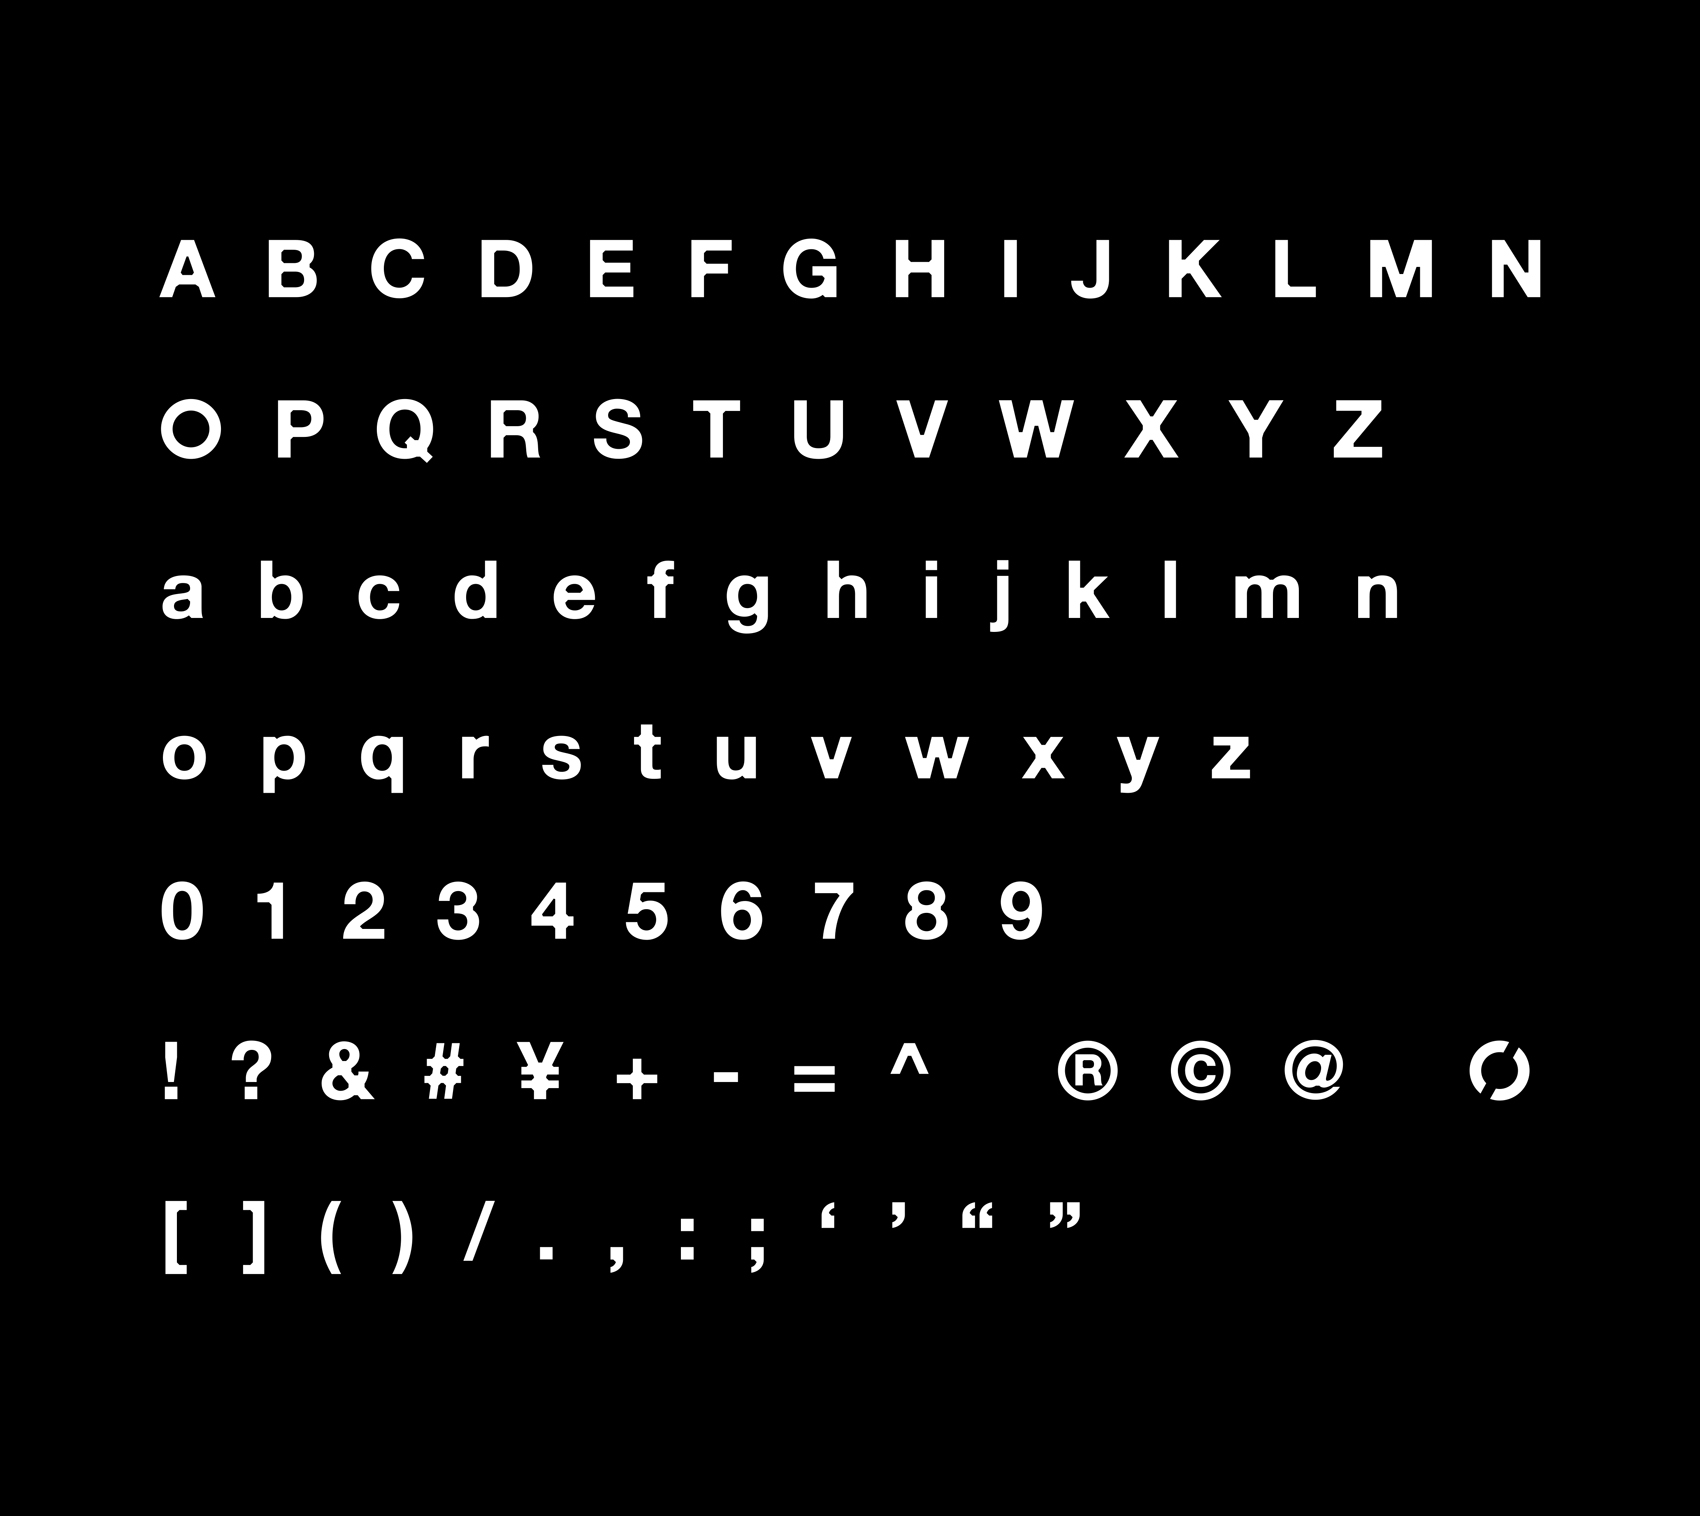 OBS_Logo/Typeface